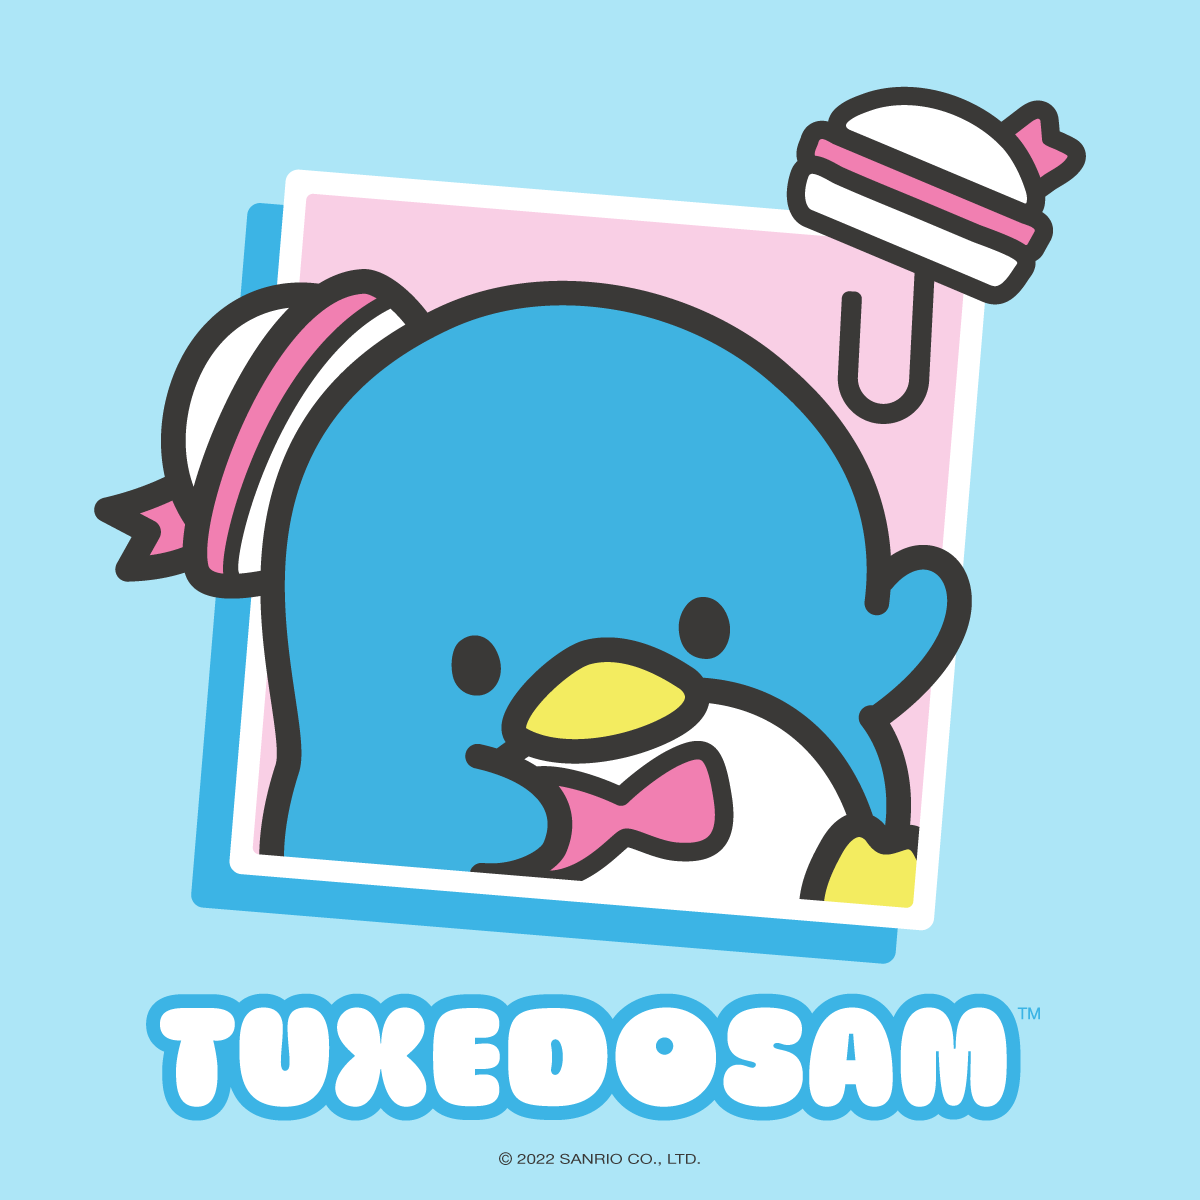 Sanrio Friend of the Month: Tuxedosam